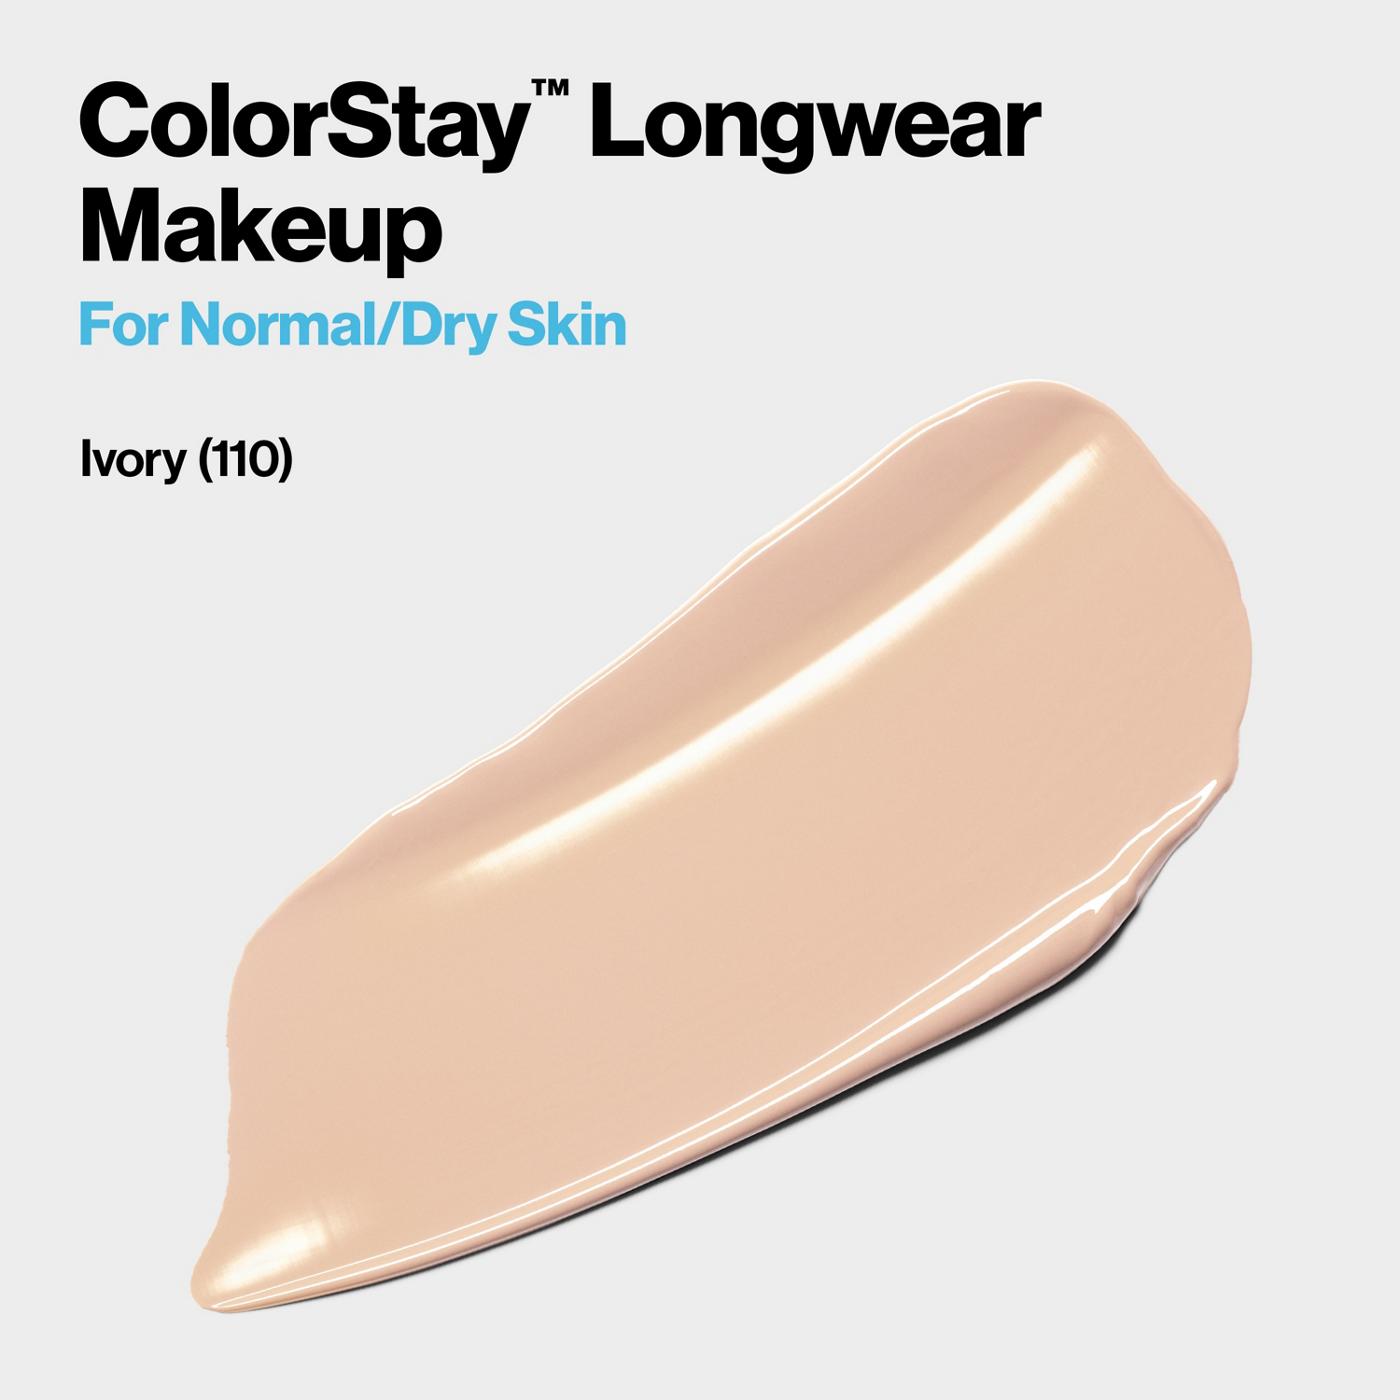 Revlon ColorStay Makeup for Normal/Dry Skin, 110 Ivory; image 5 of 6